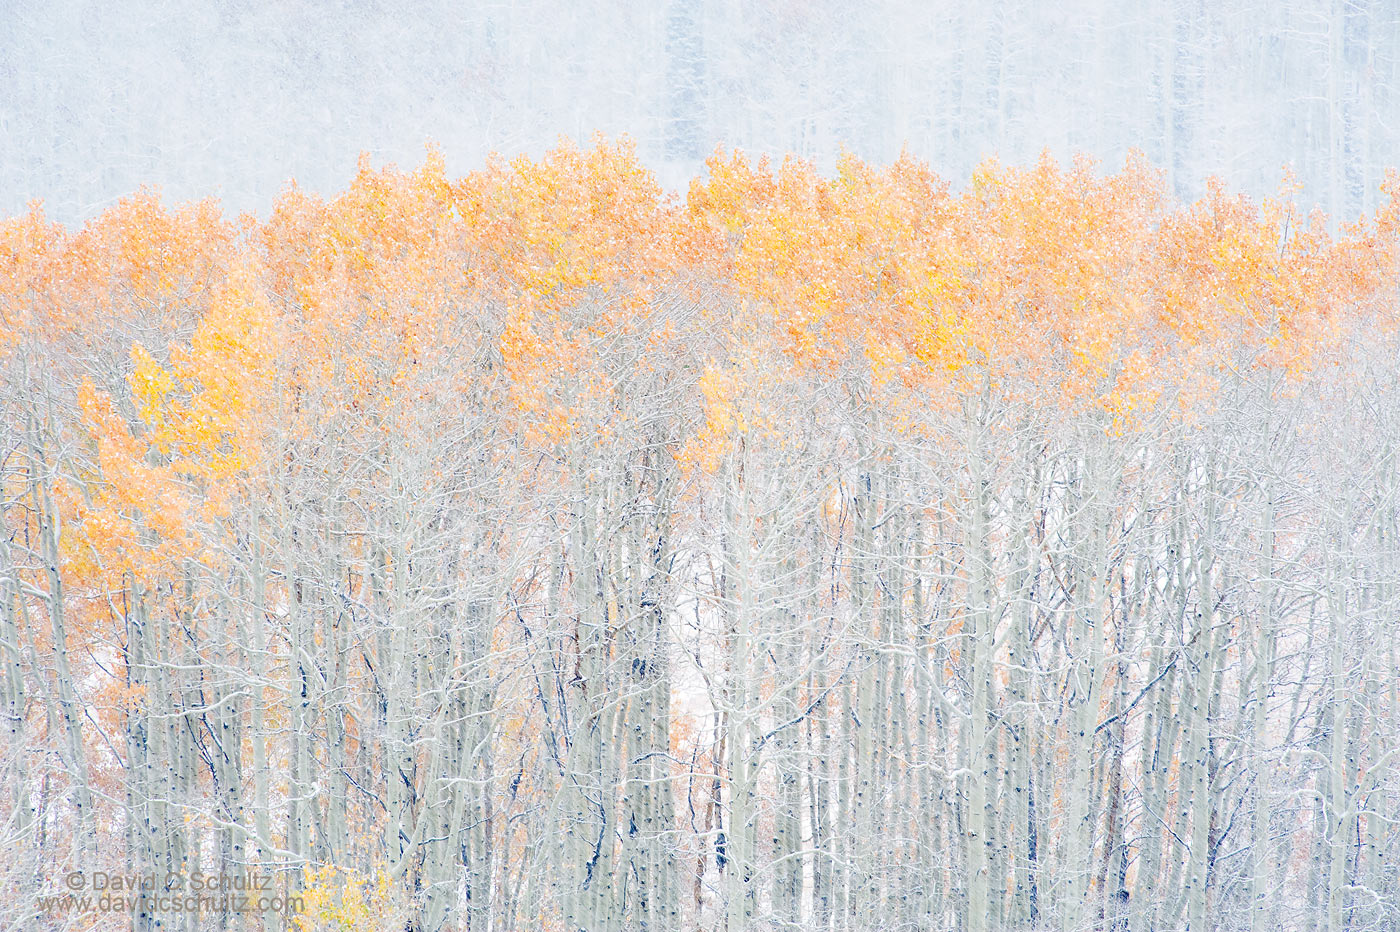 Utah aspen trees in the fall - Image #3-5368